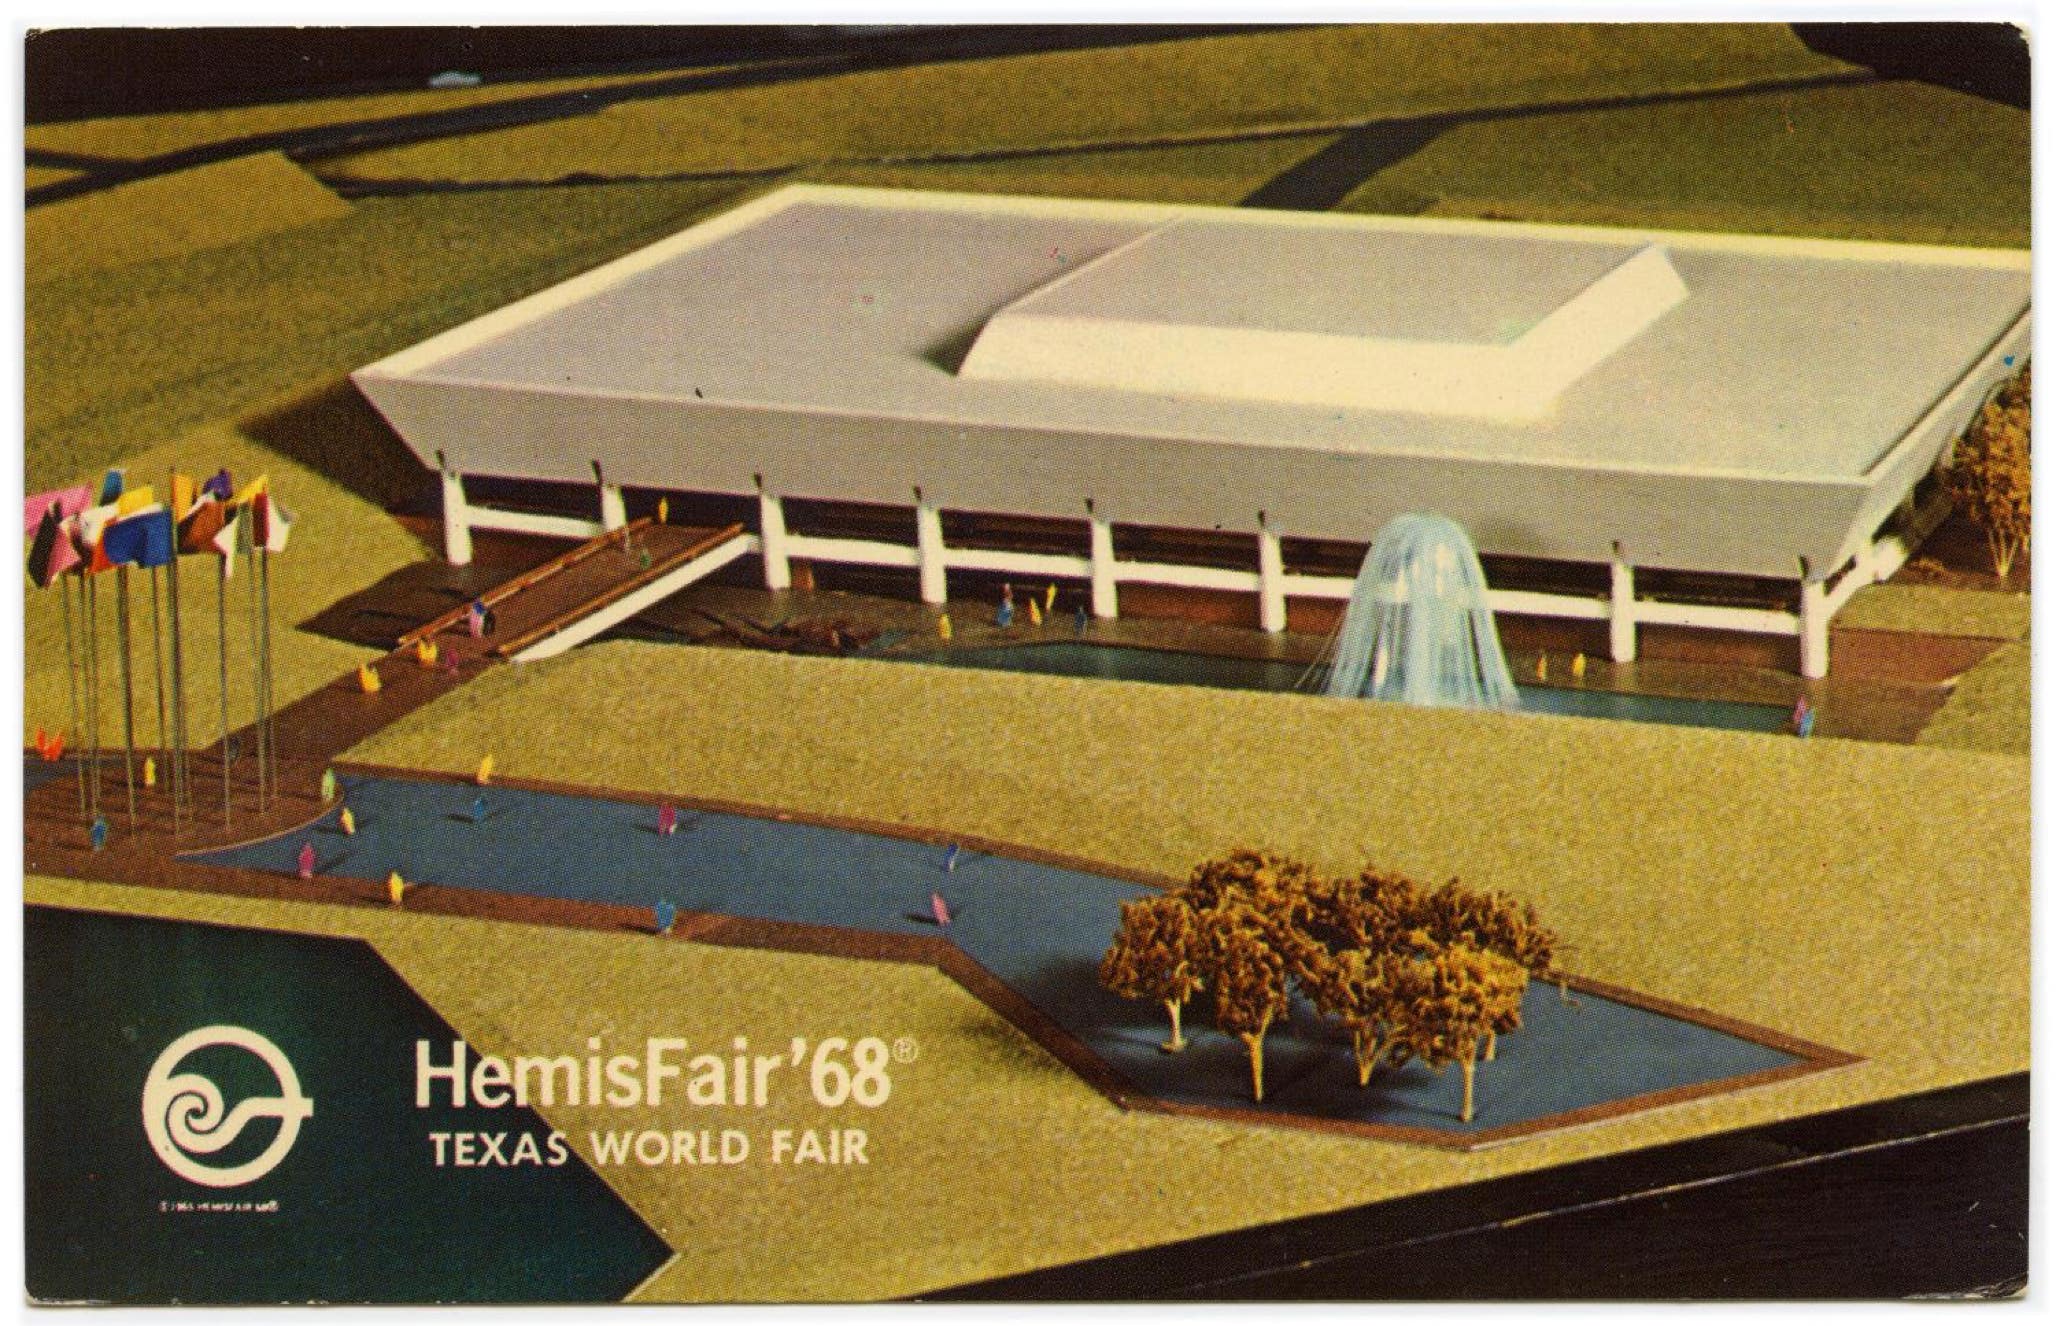 Postcard image of the Texas Pavilion as d designed for  Hemisfair '68